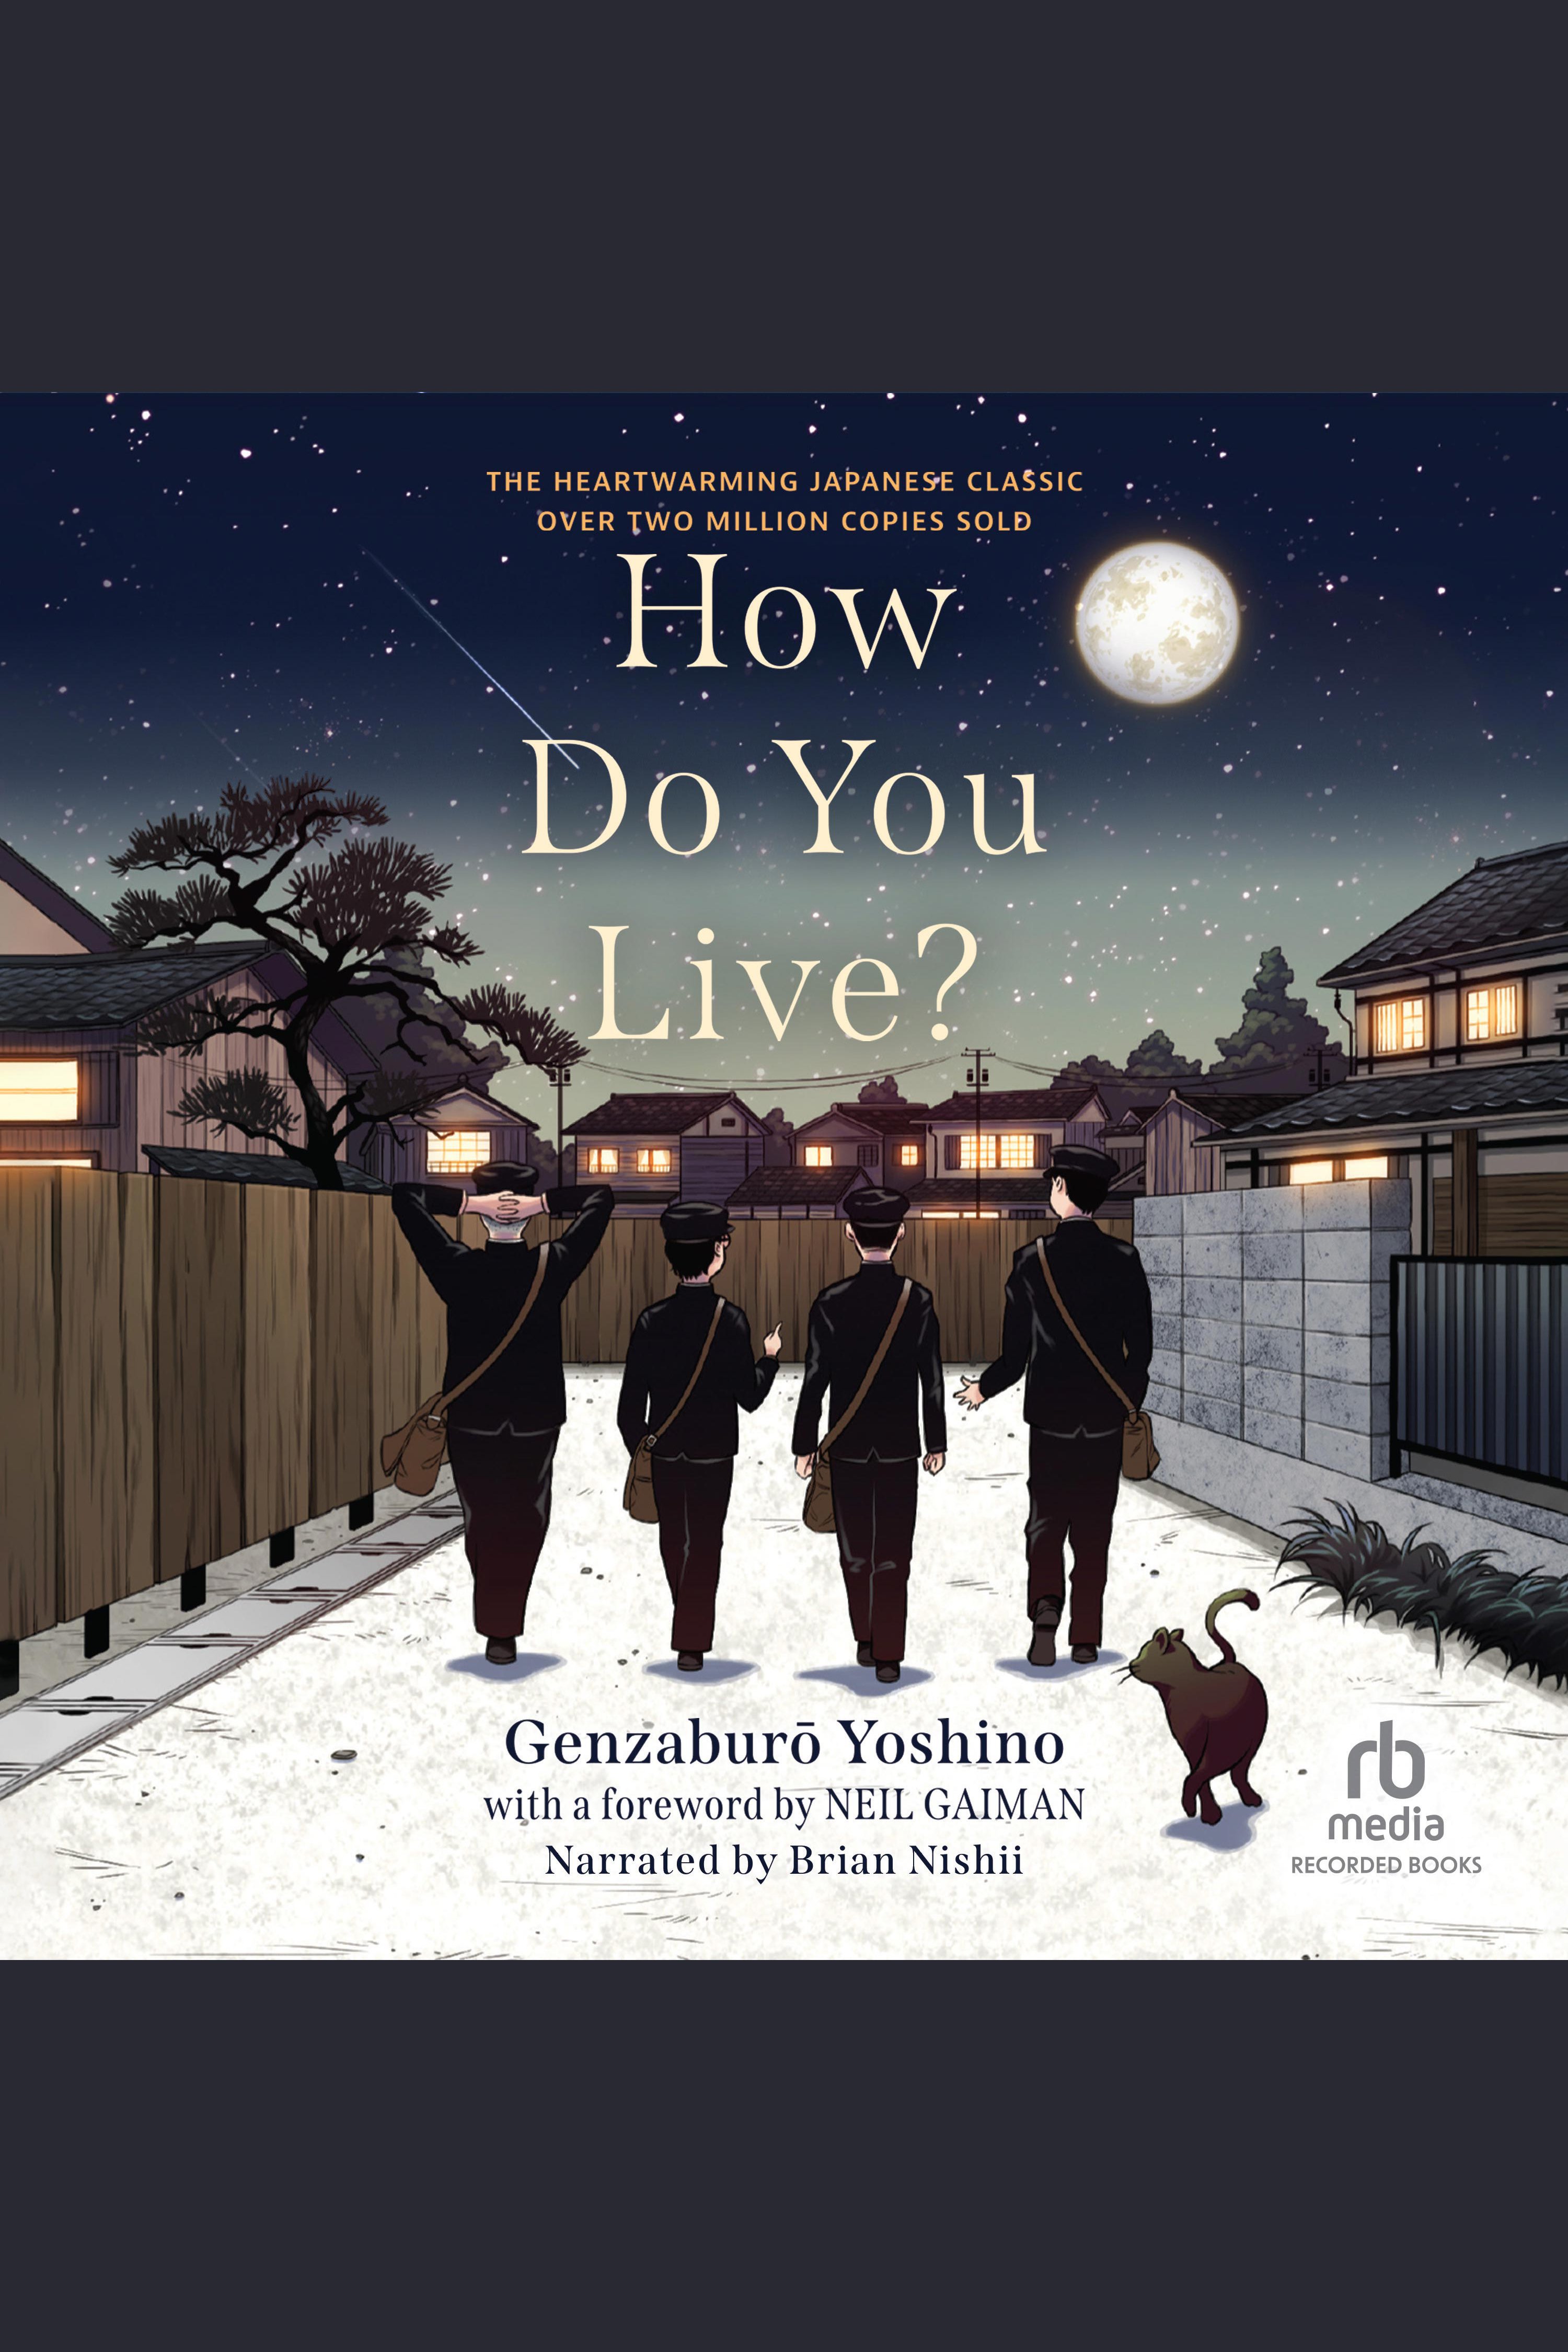 How Do You Live? cover image